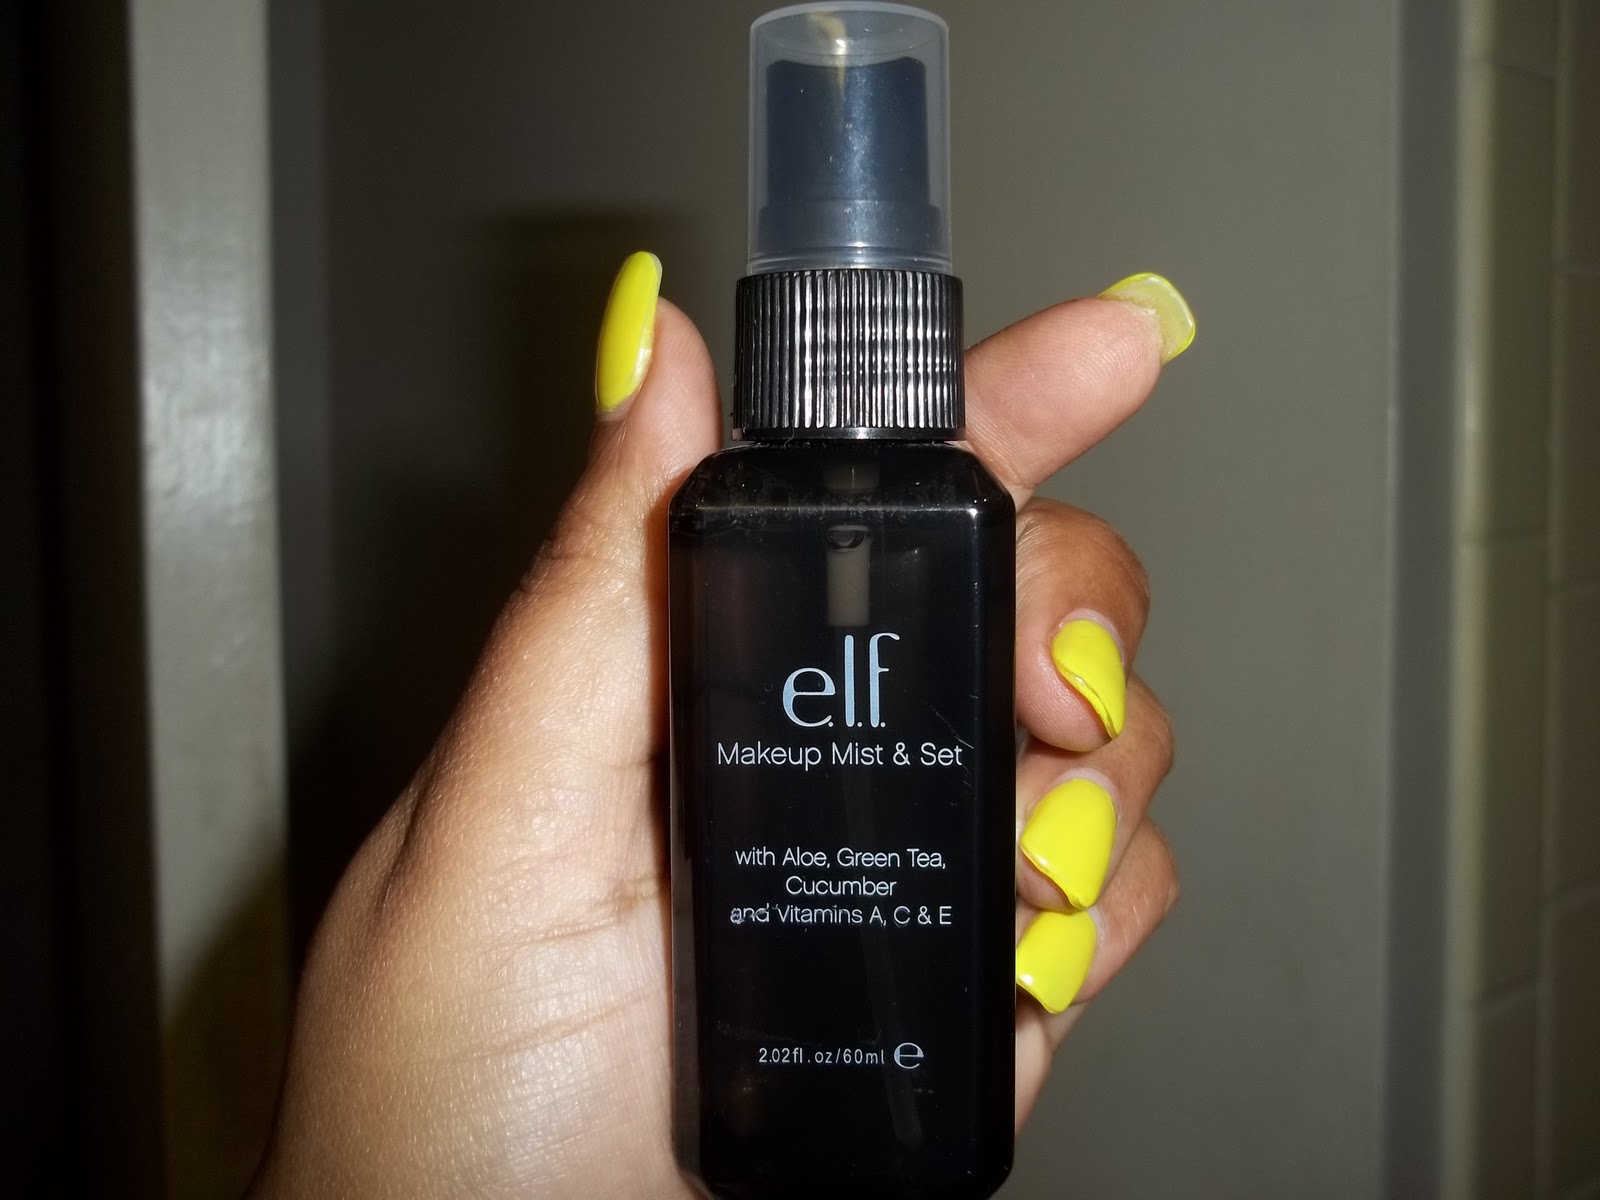 Elf makeup mist review